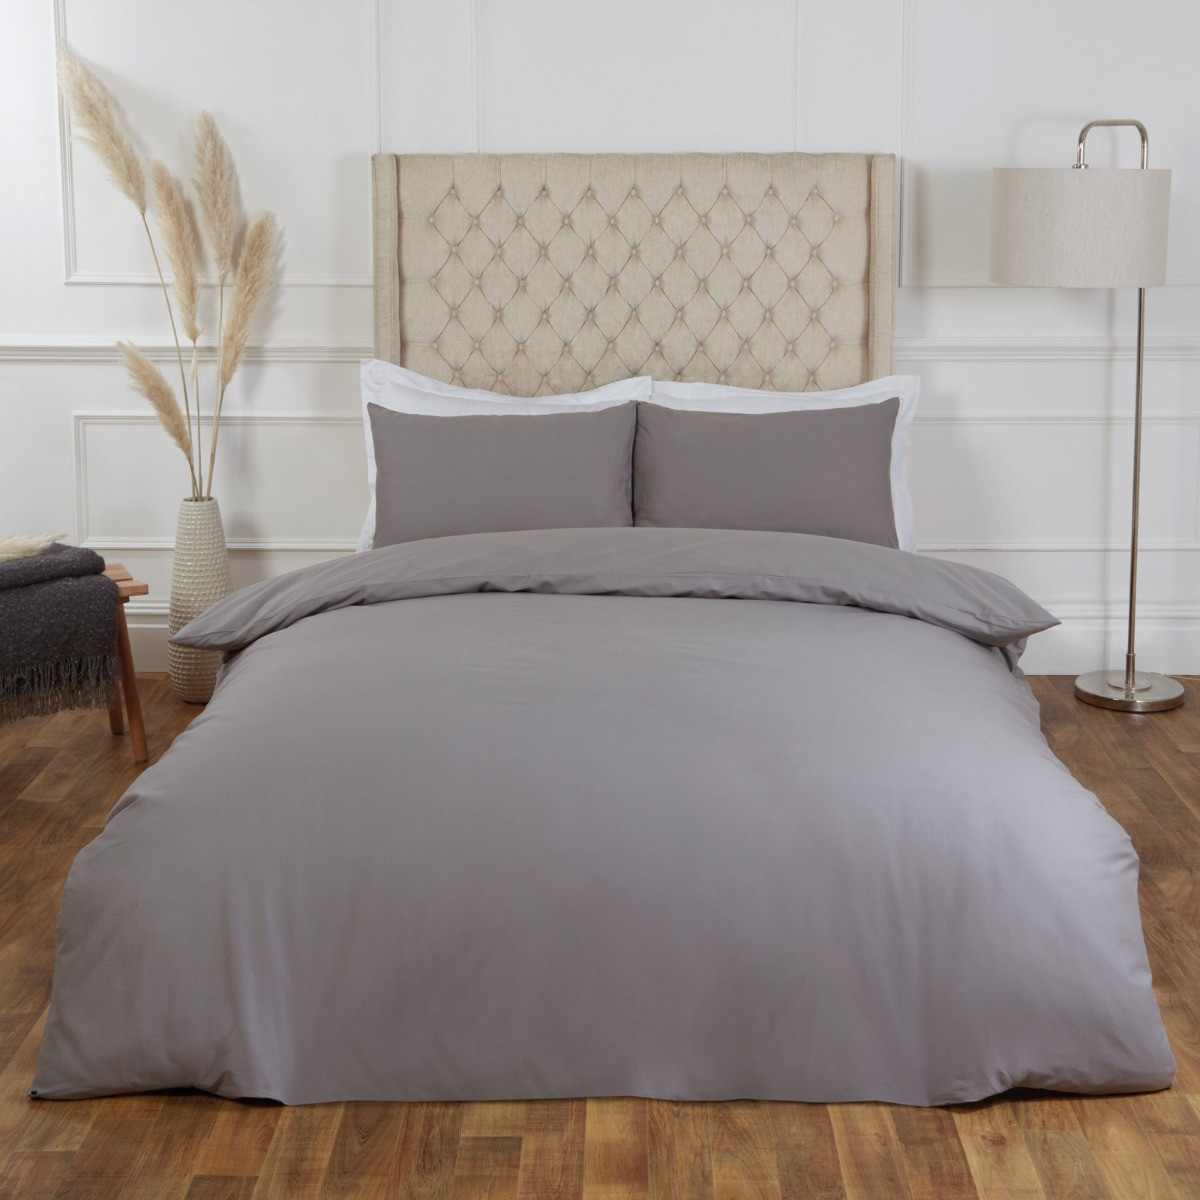 Highams Plain 100% Cotton Duvet Cover with Pillow Case Bedding Set, Grey - Super King>